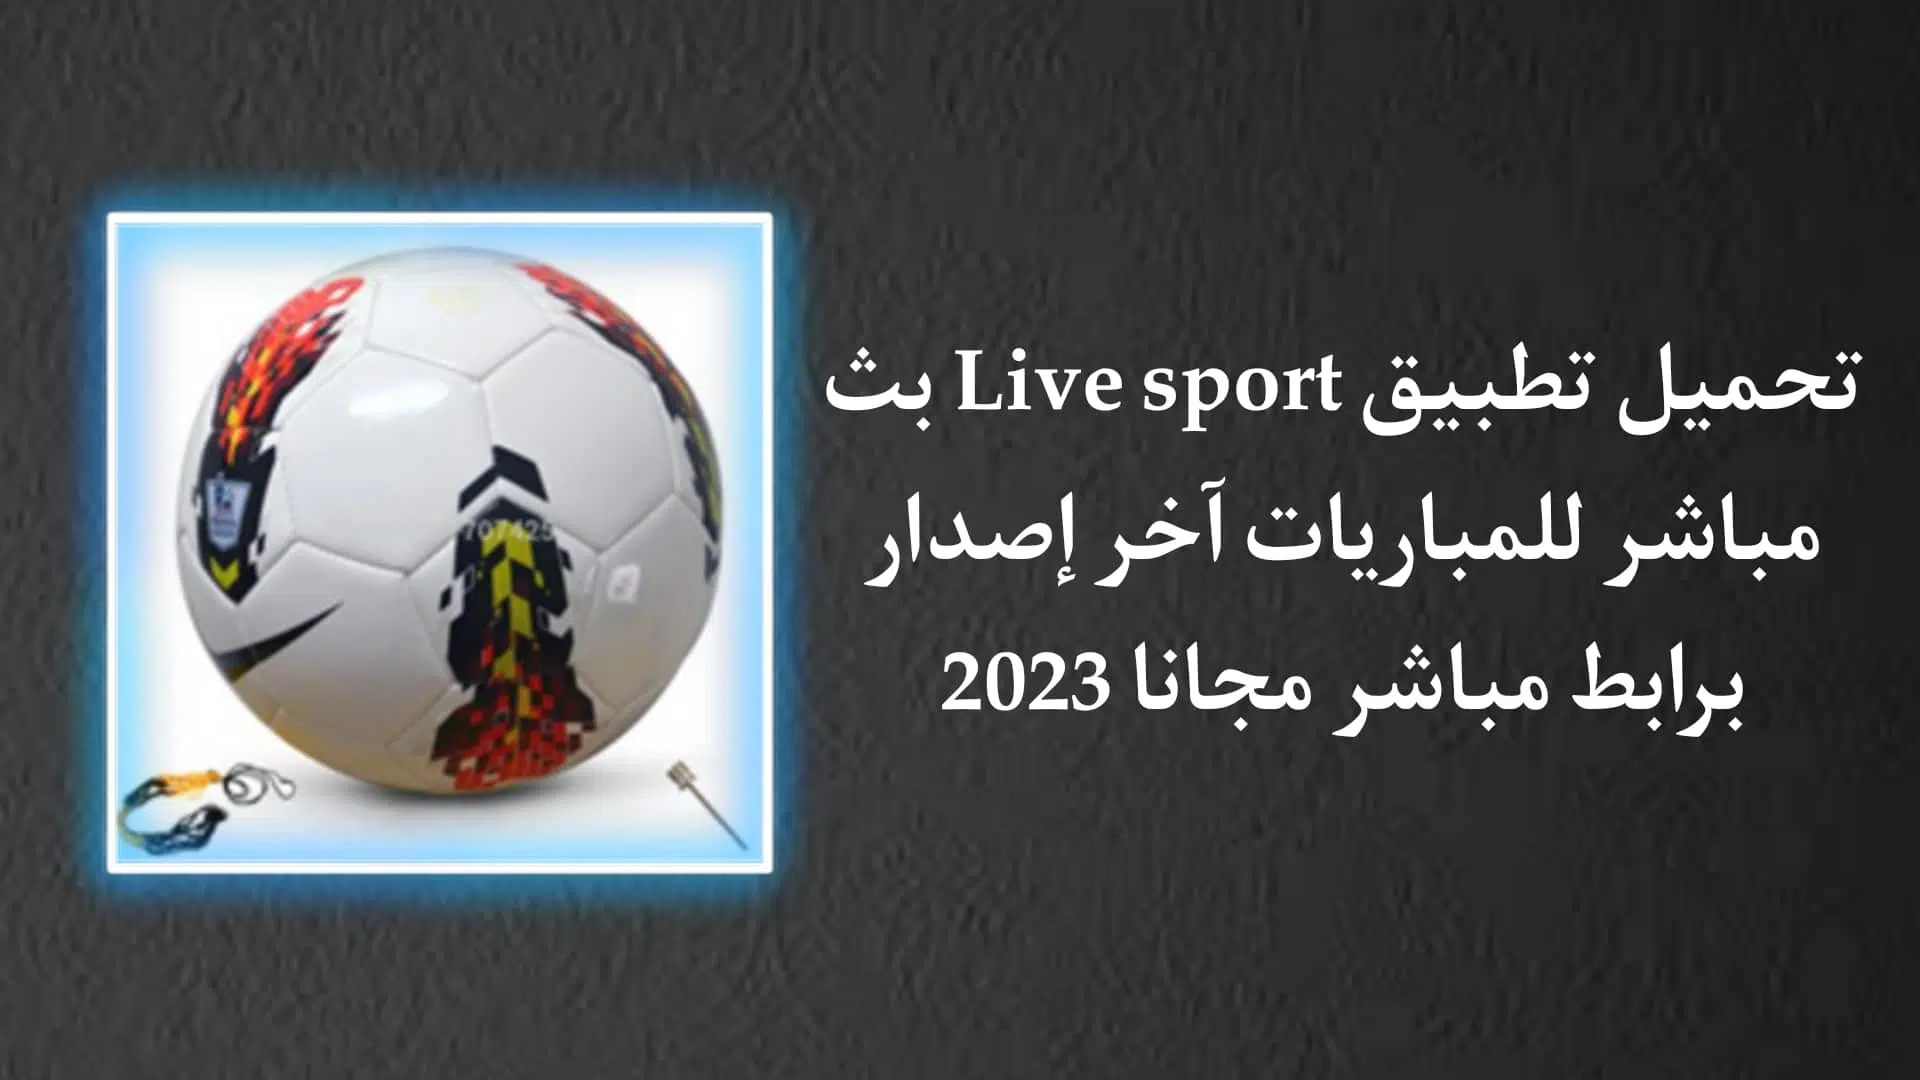 تحميل تطبيق بث مباشر للمباريات Live Sport بدون اعلانات APK